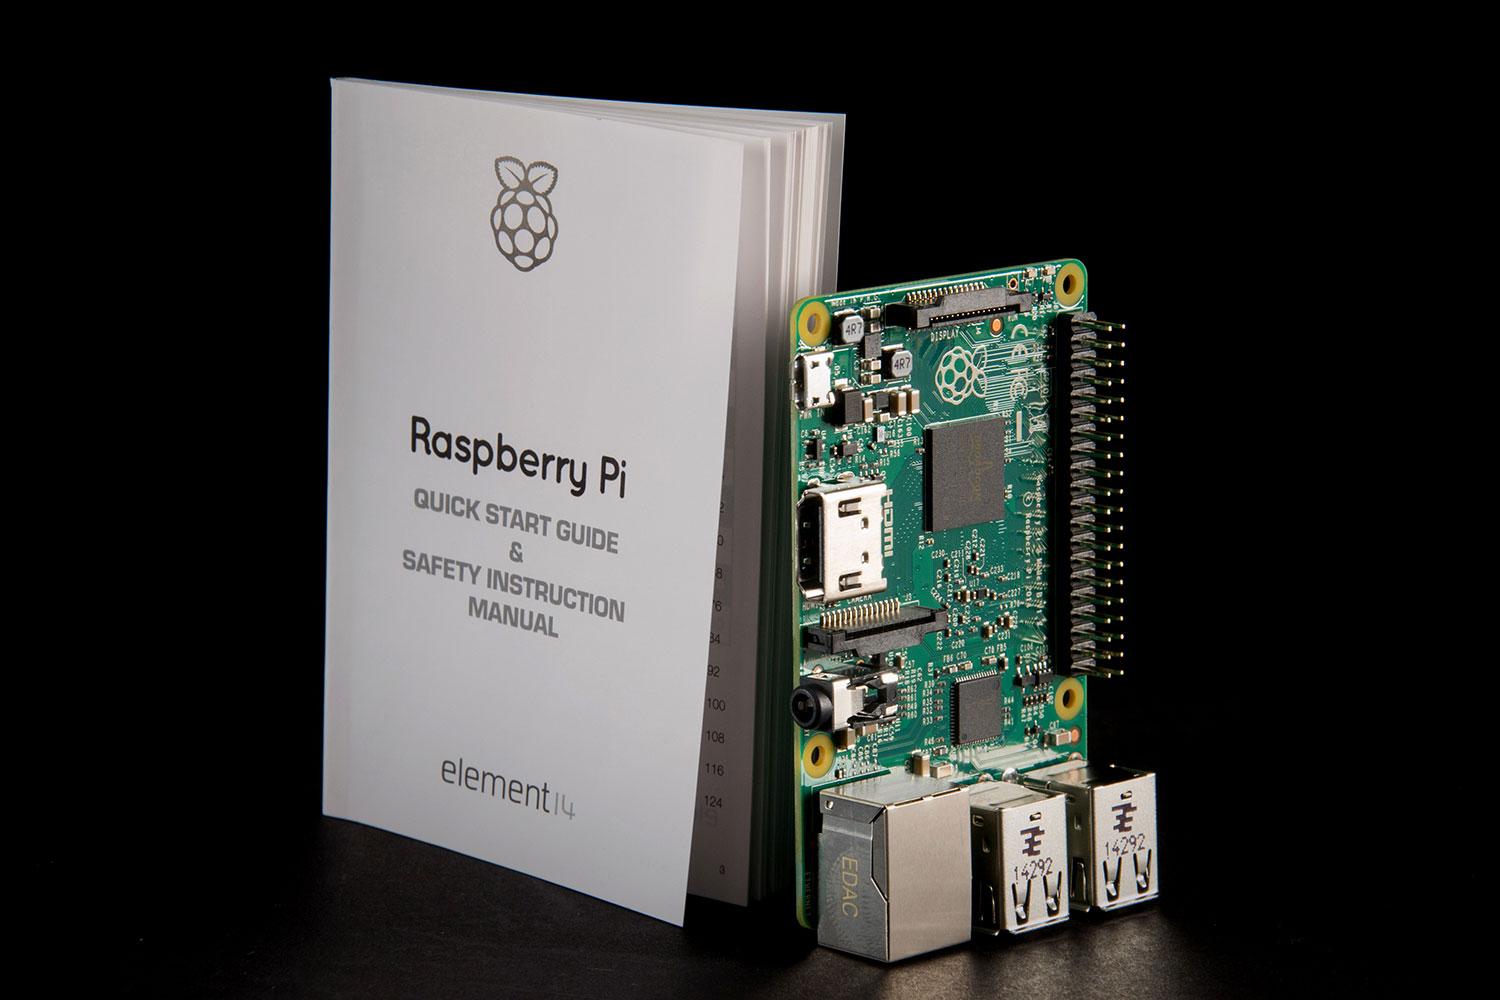 Raspberry Pi 2 mini PC